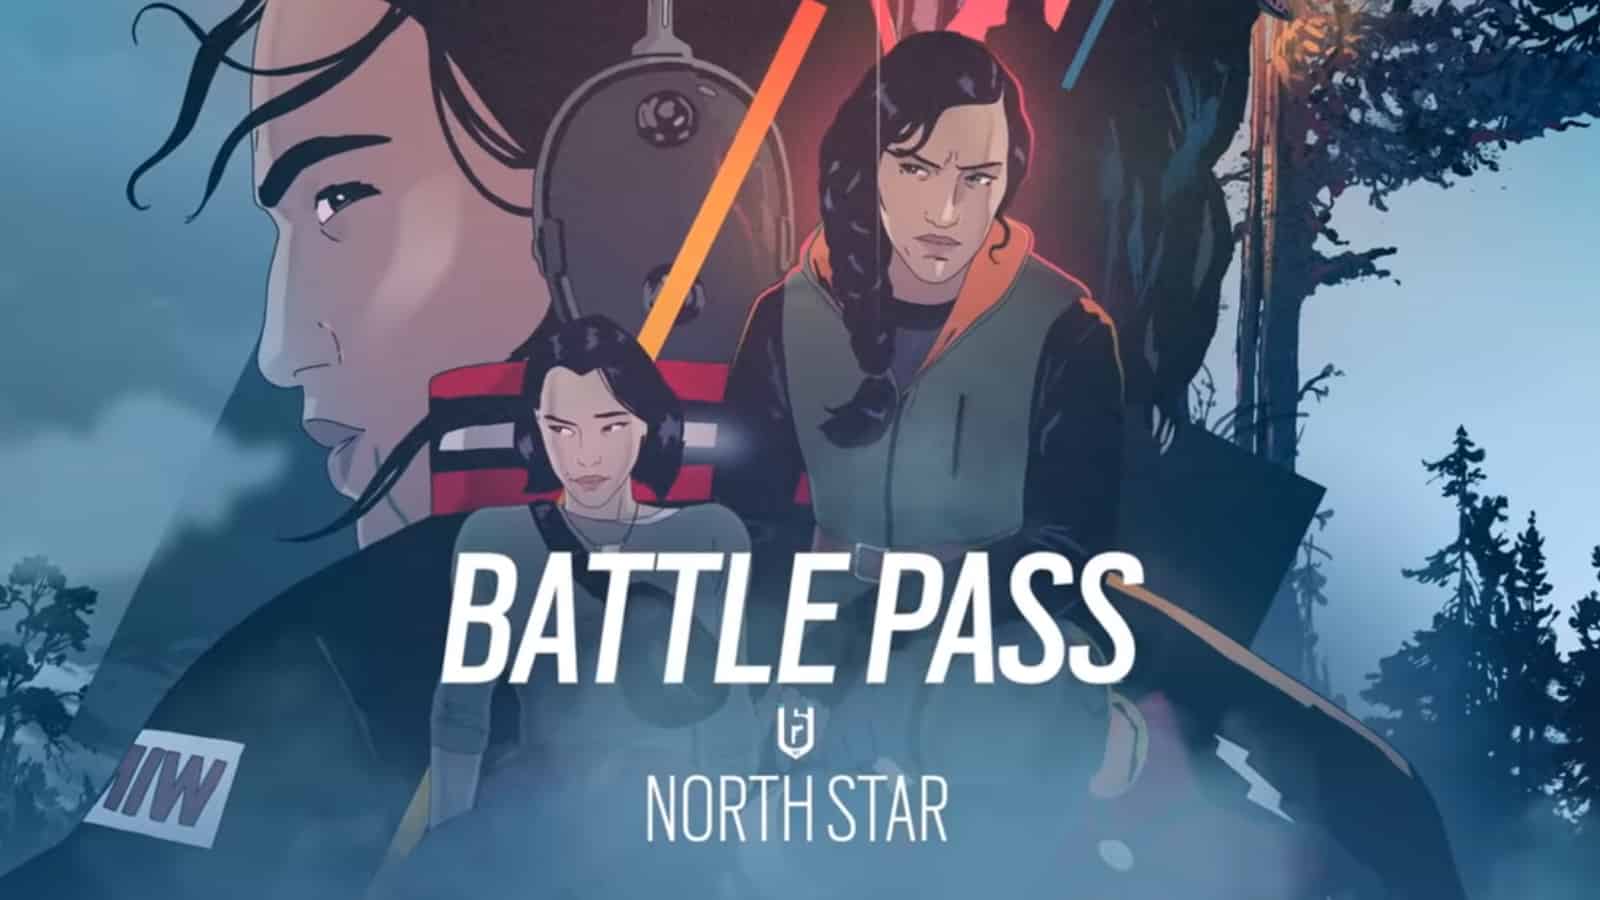 Second Season Pass Announced For All-Star Battle R